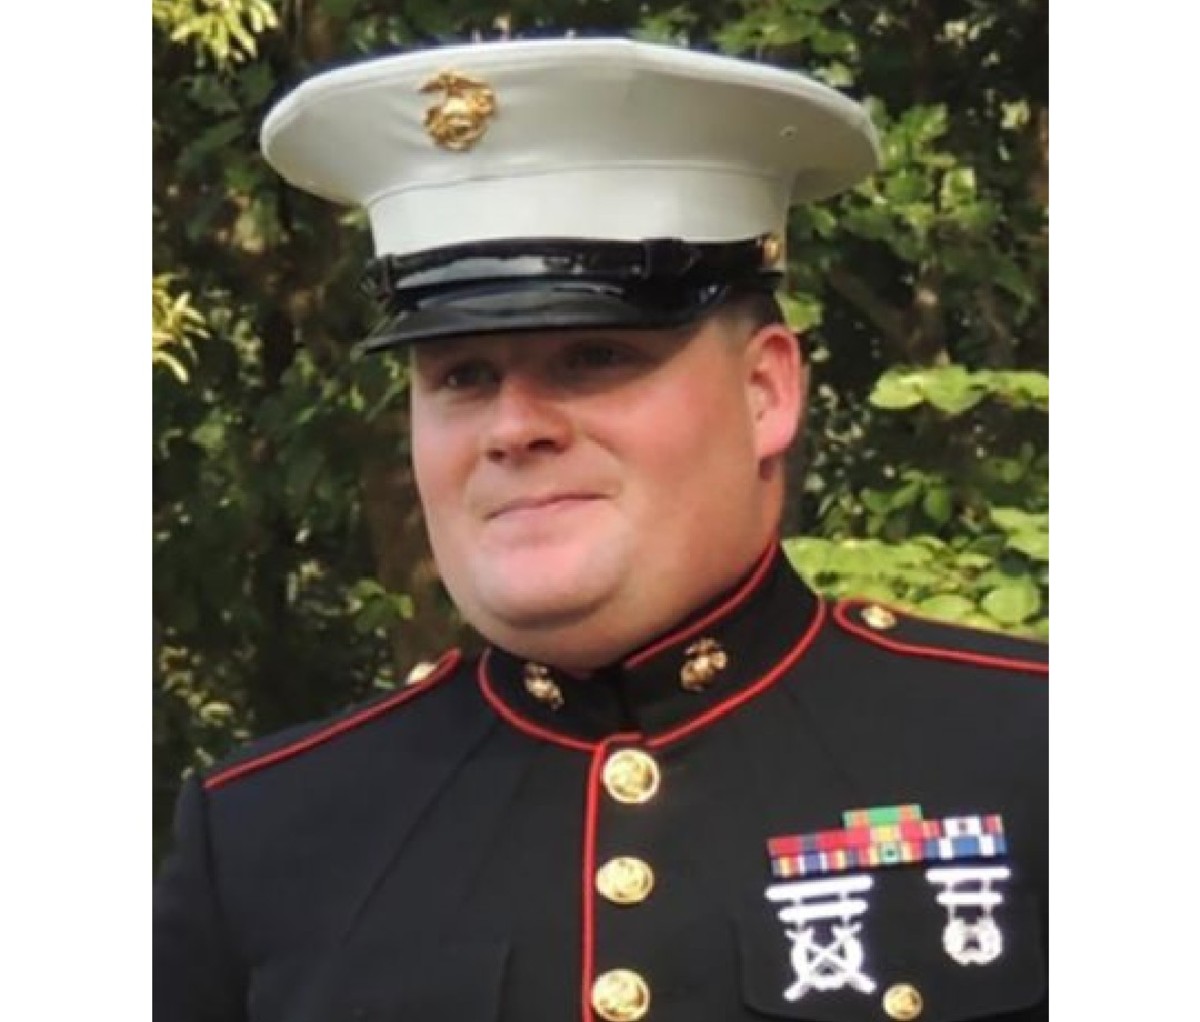 Staff Sergeant Darin “Taylor” Hoover Jr., U.S. Marine Corps